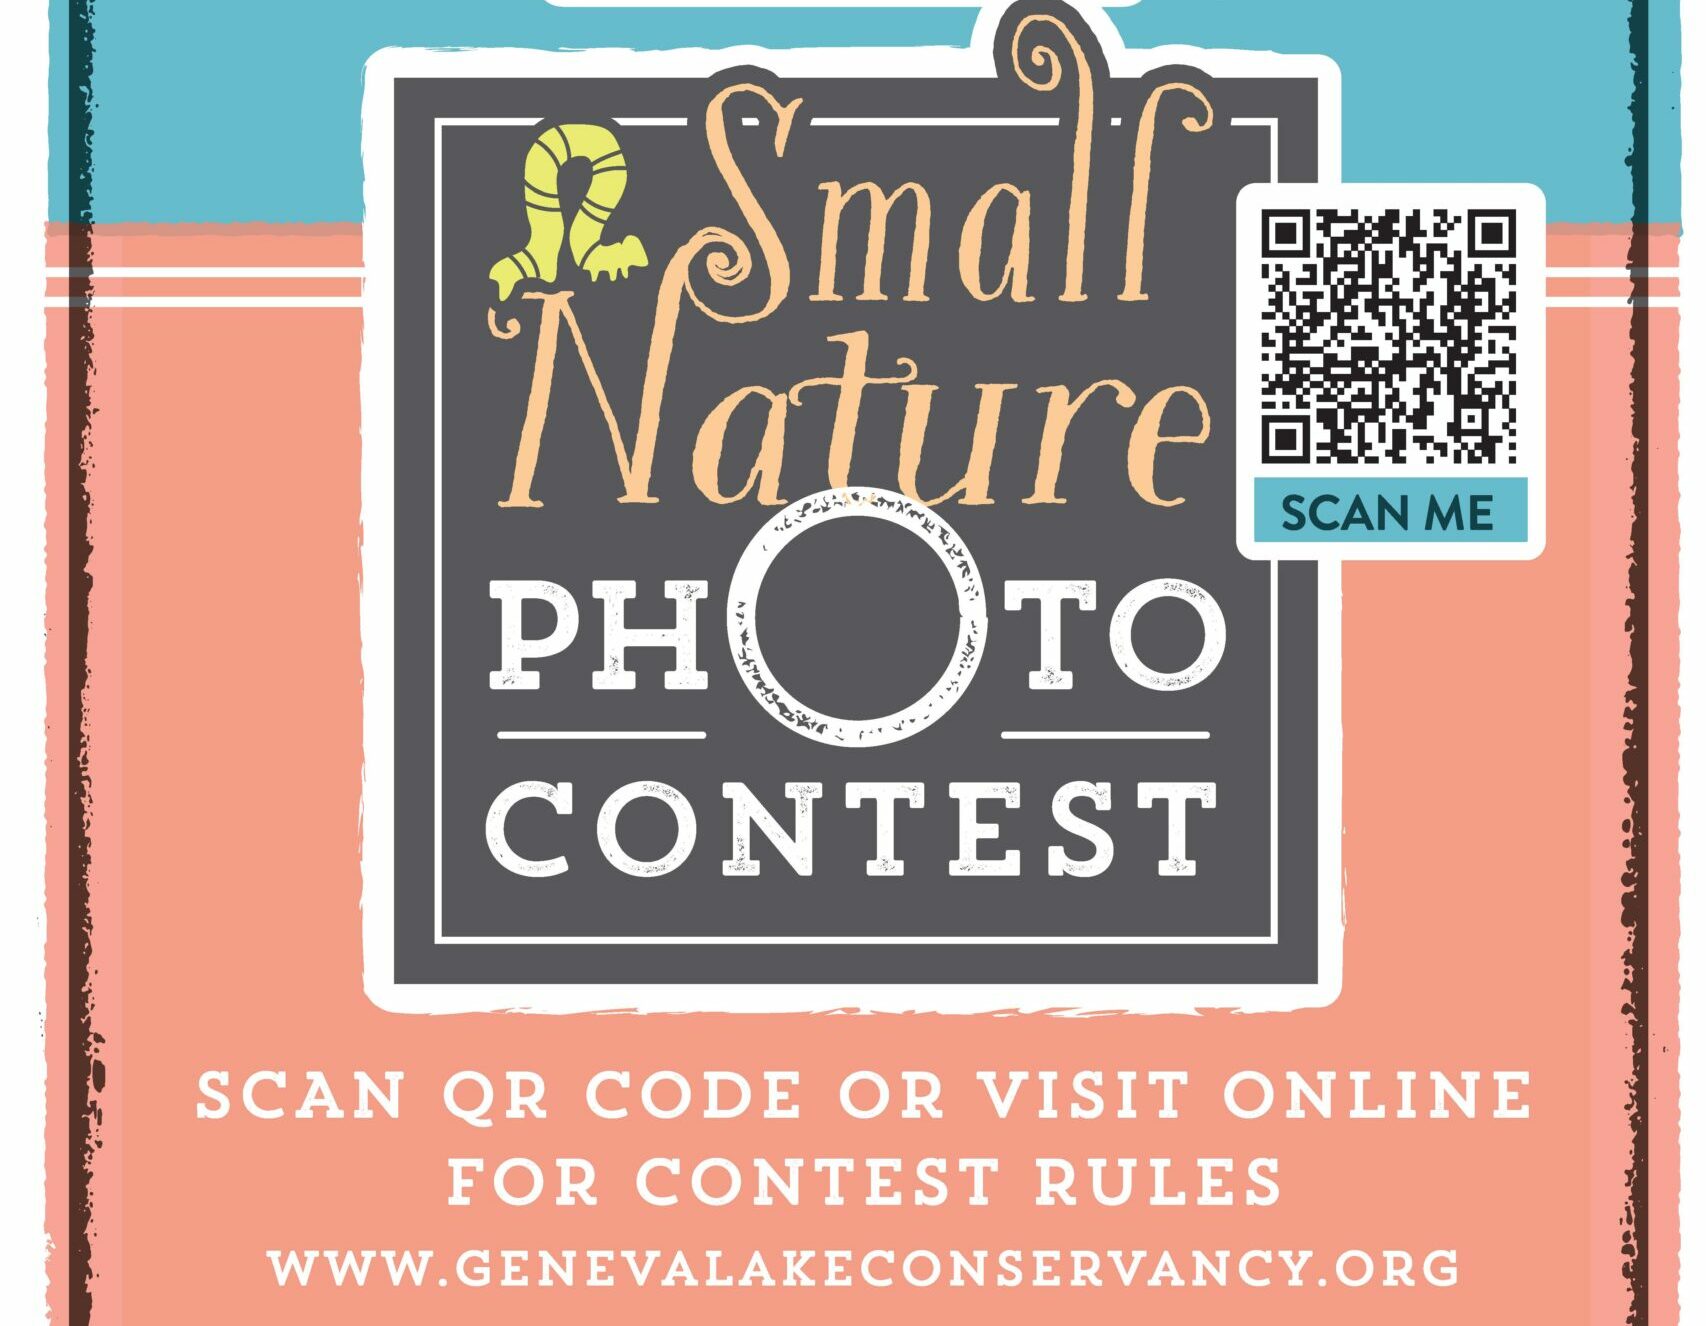 Poster for the Geneva Lake Conservancy's Small Nature Photo Contest Reception